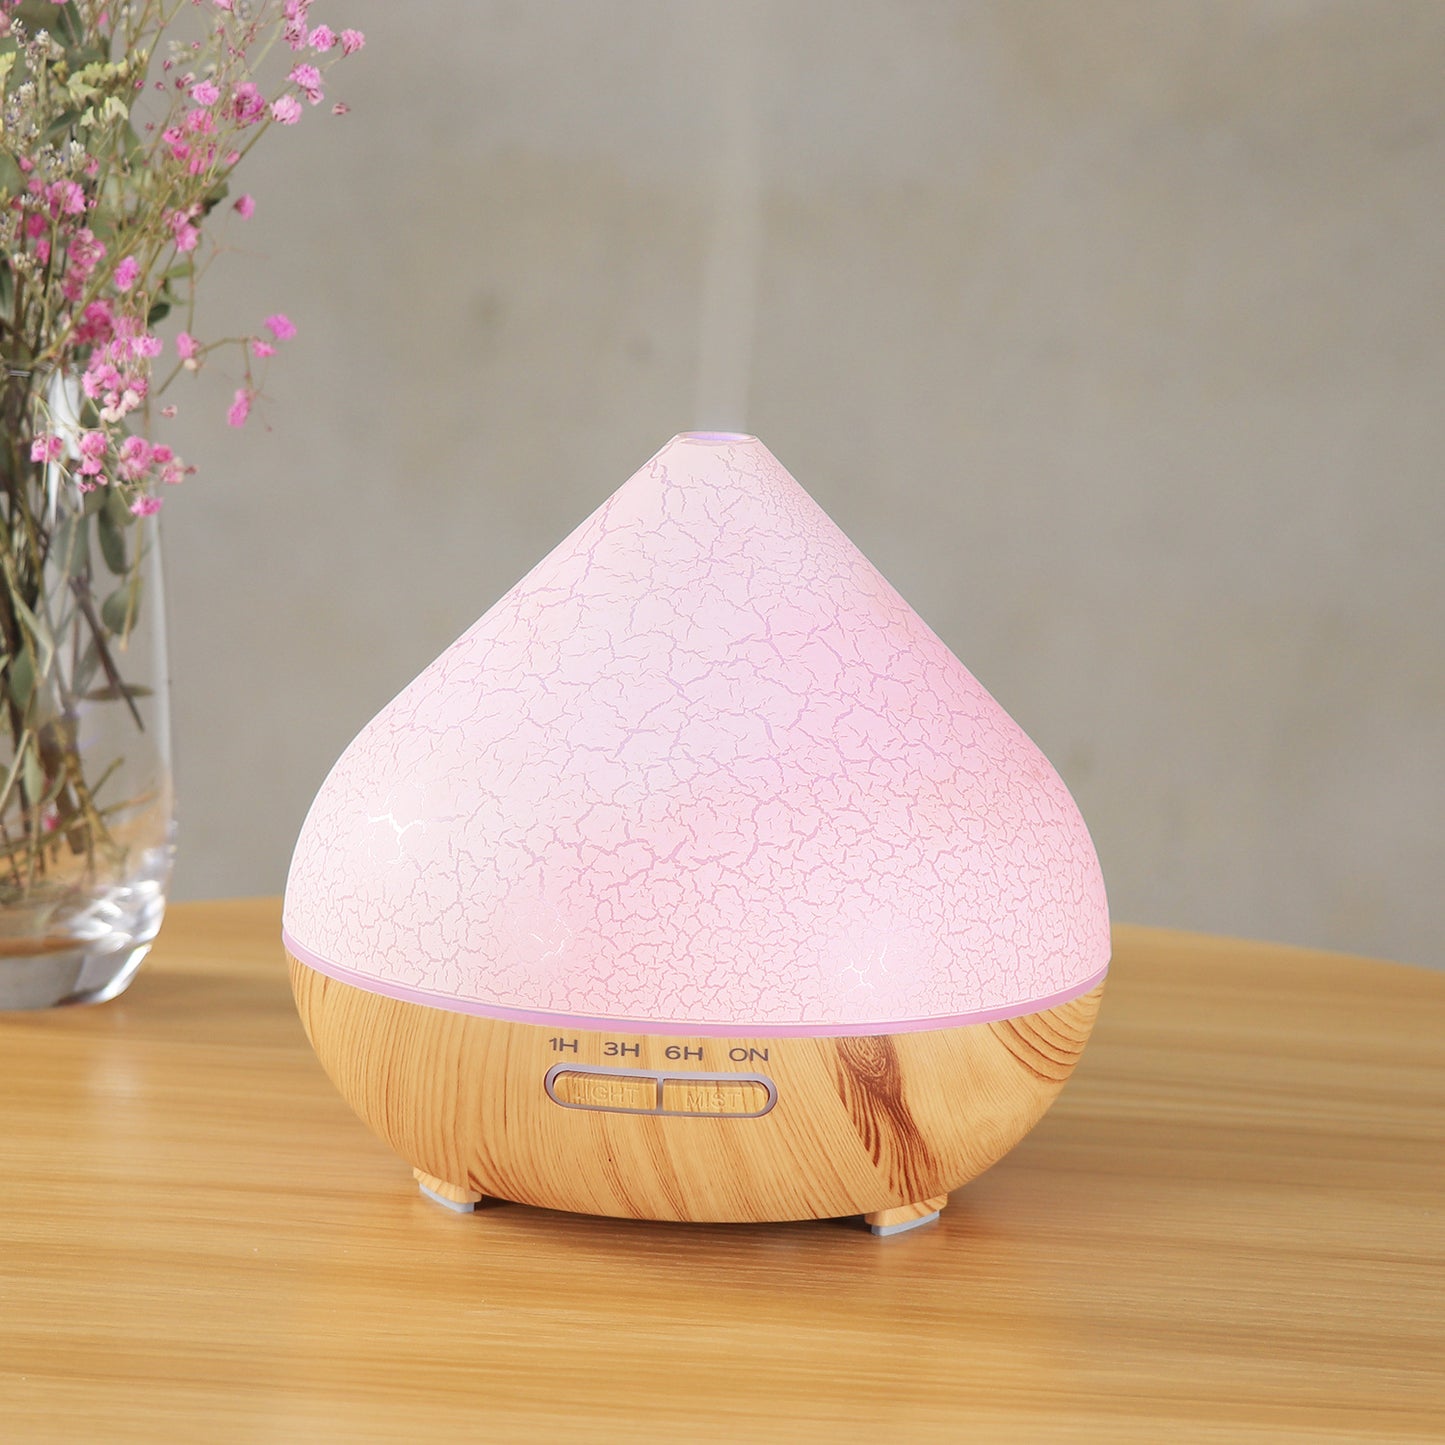 Crackle Volcano Humidifier Colorful Diffuser Aroma Diffuser